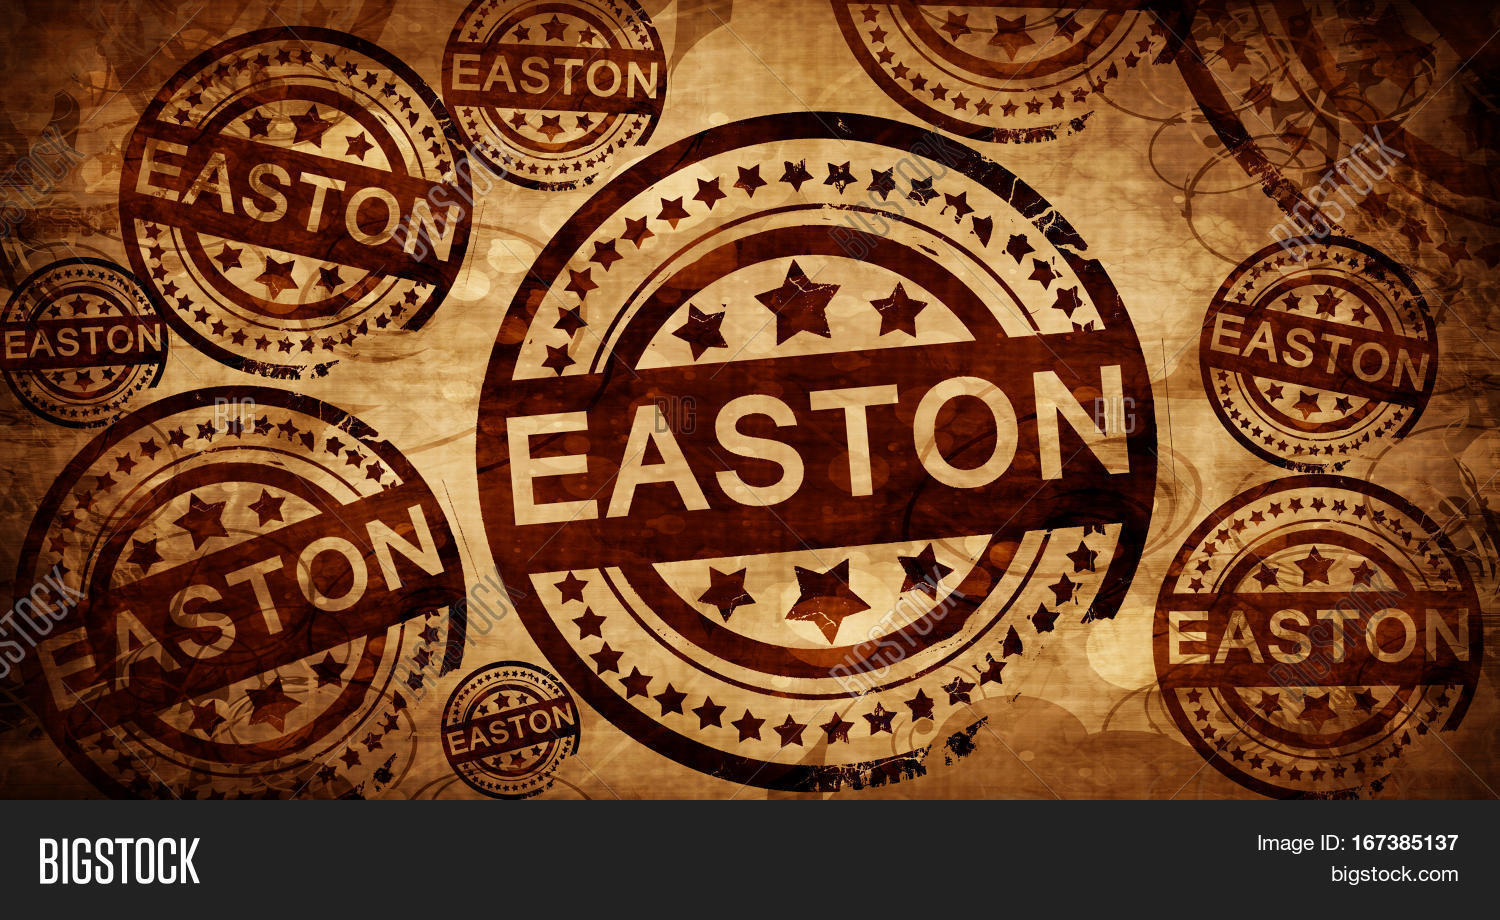 Easton vintage stamp image photo free trial bigstock